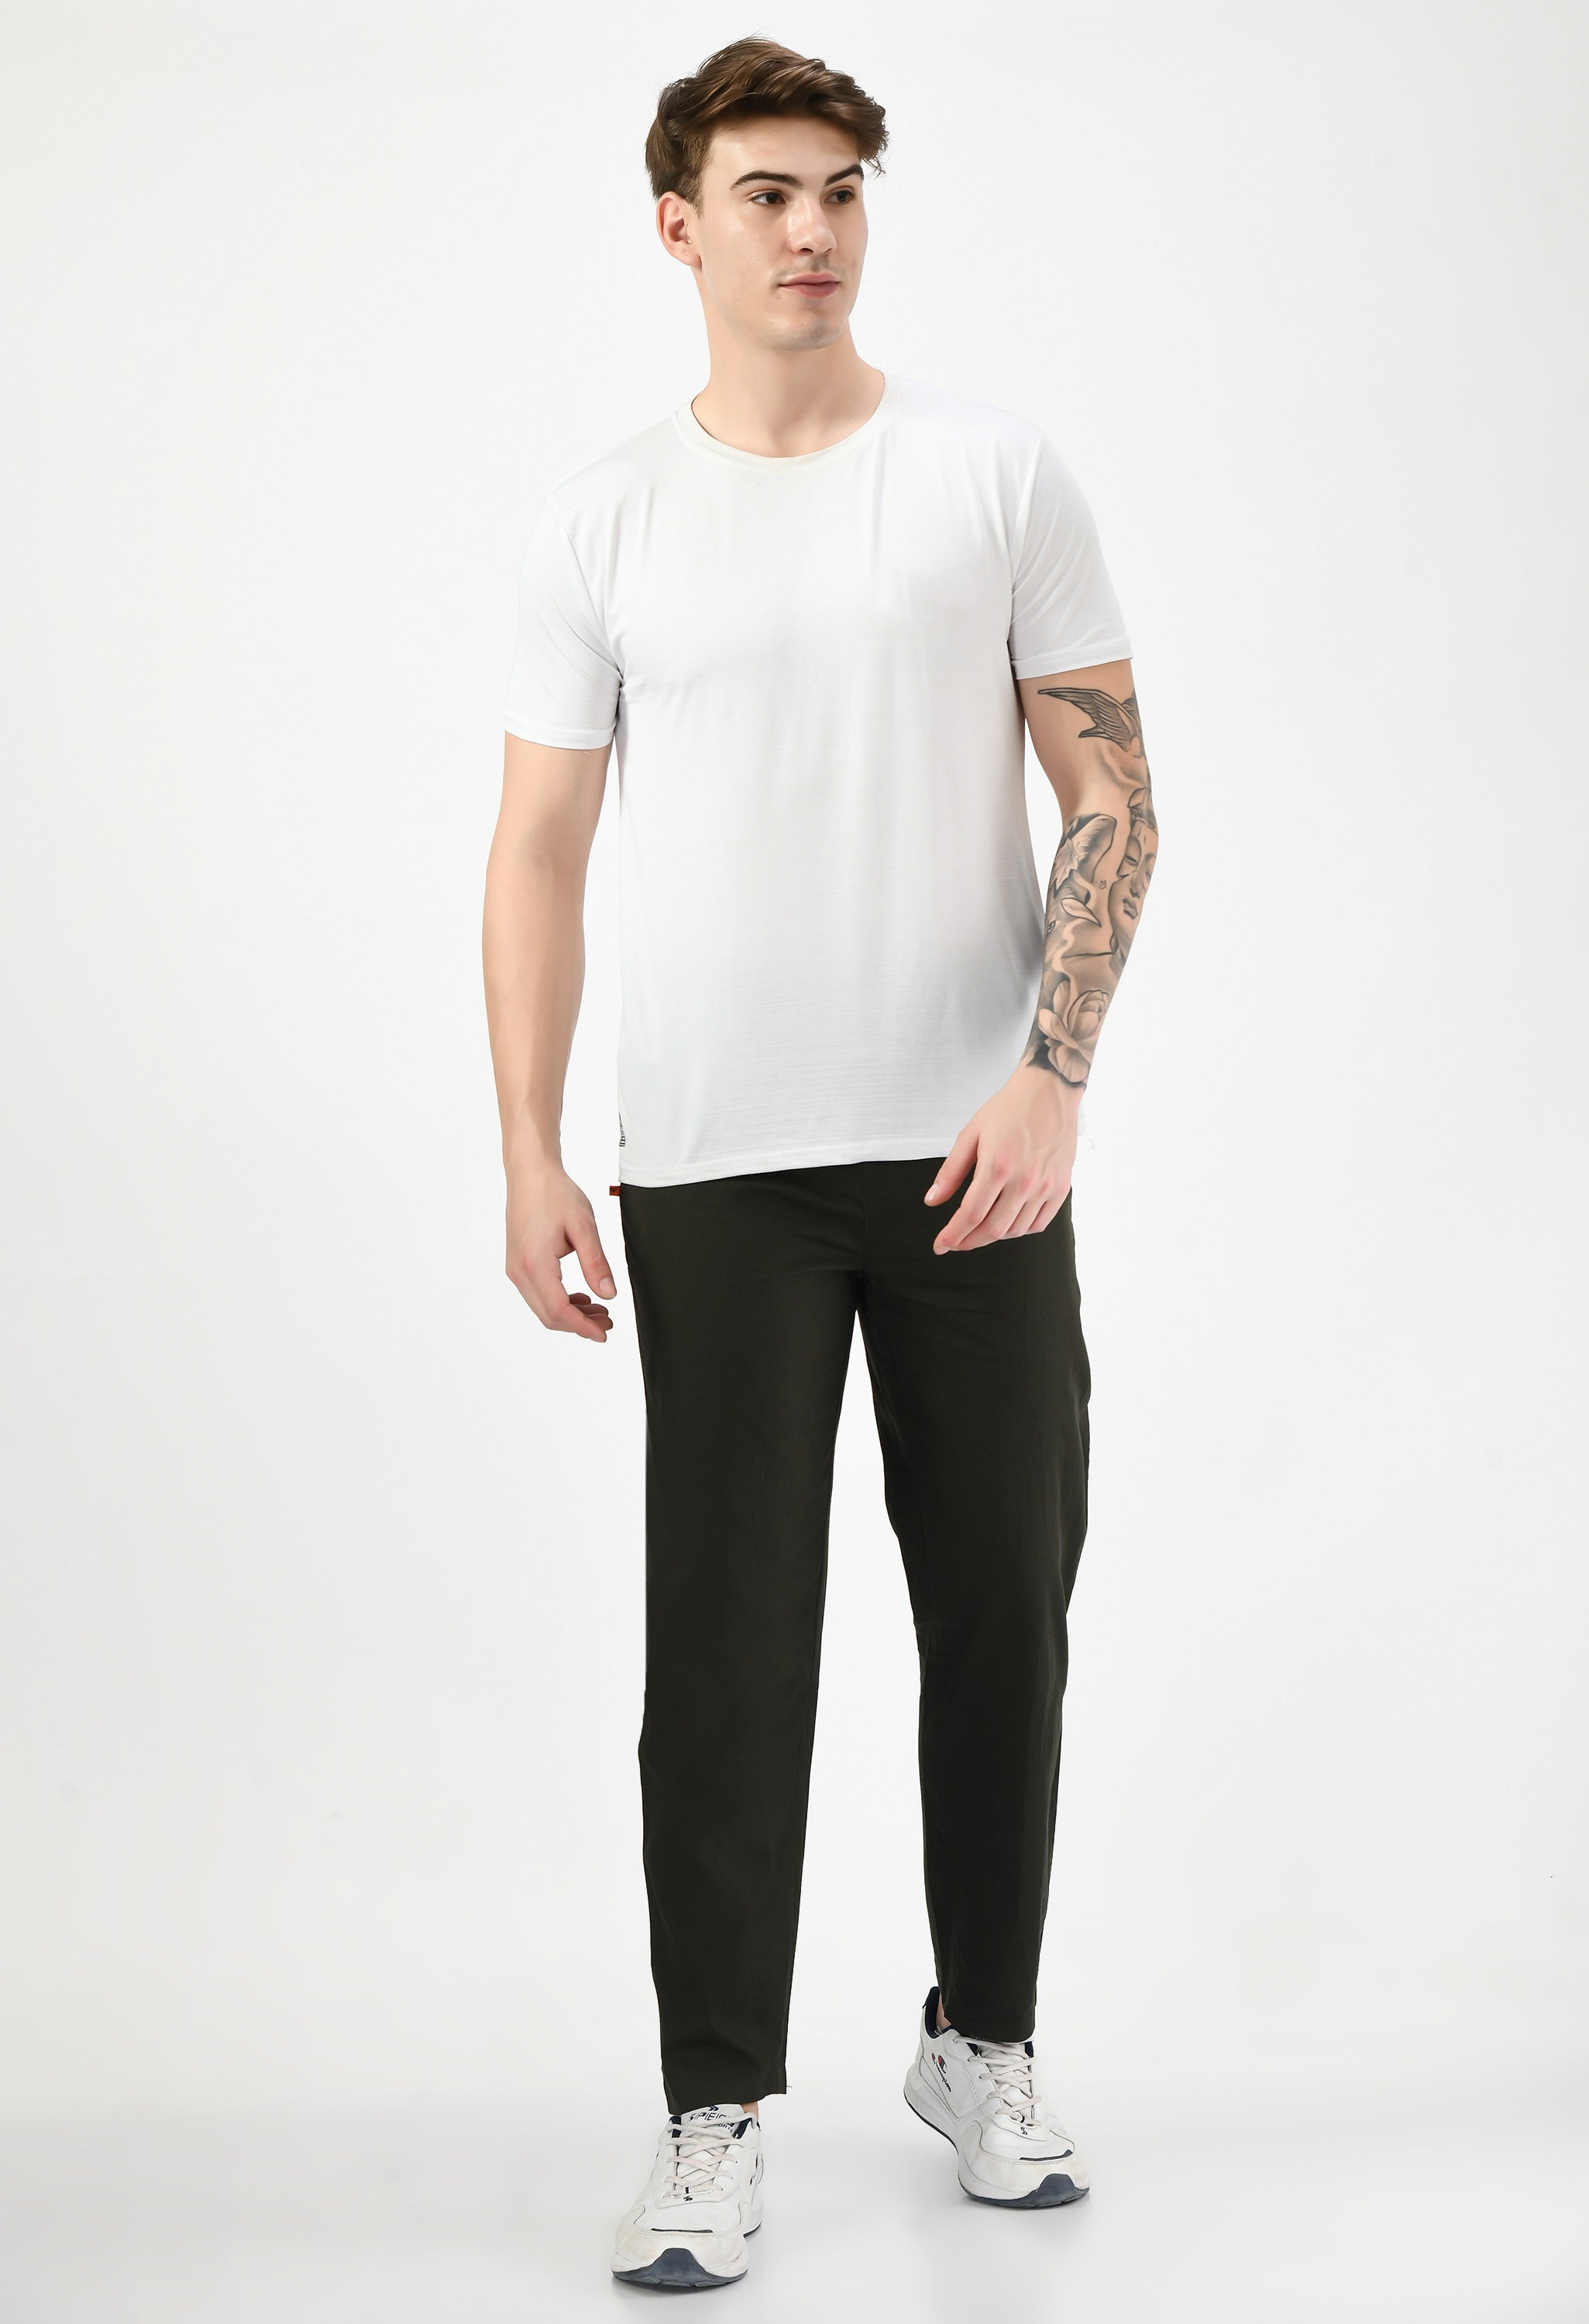 Men's Black Plain Relaxed Fit Casual Trouser